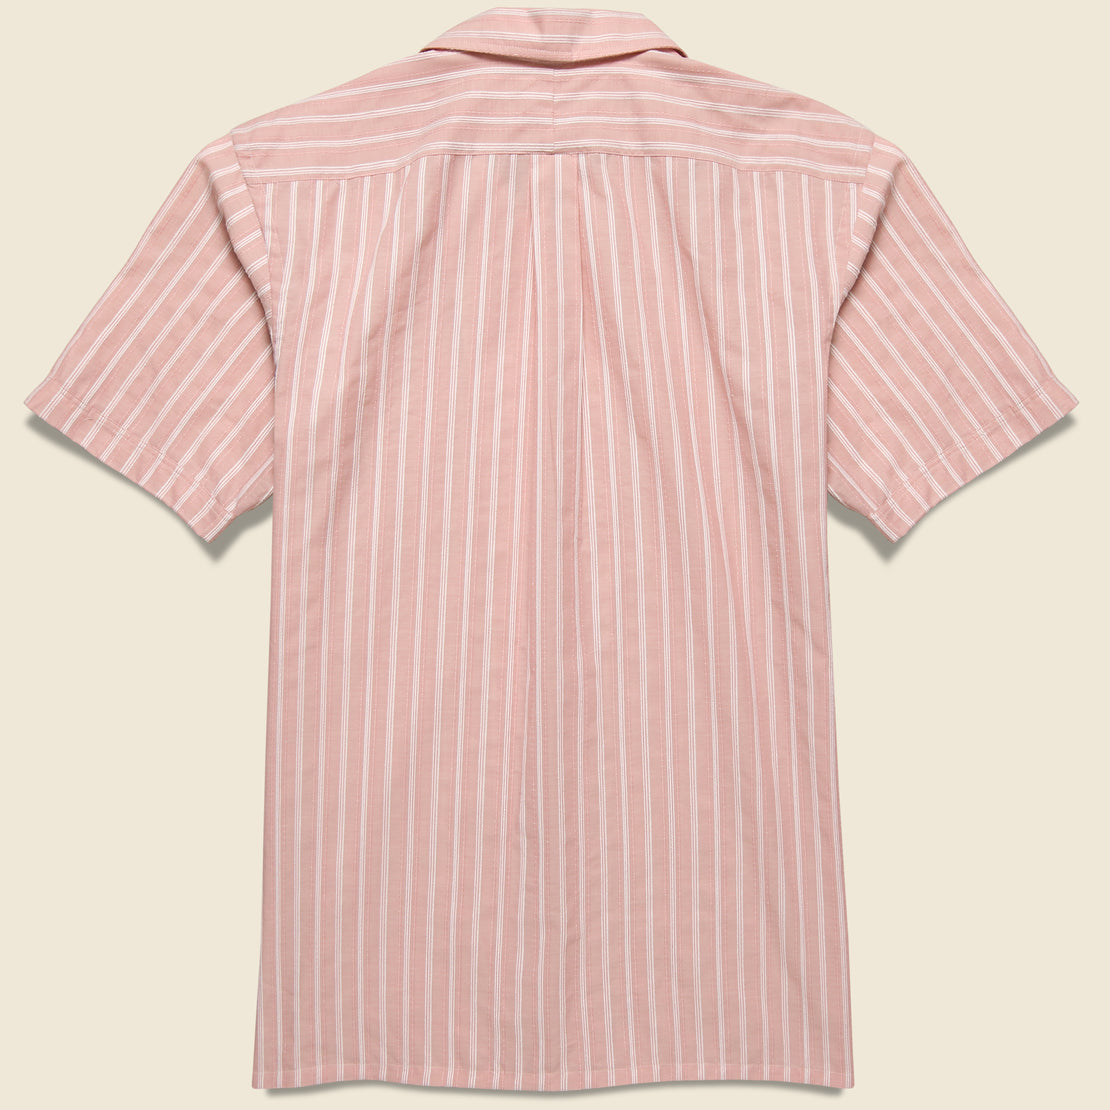 Textured Stripe Shirt - Pink/White